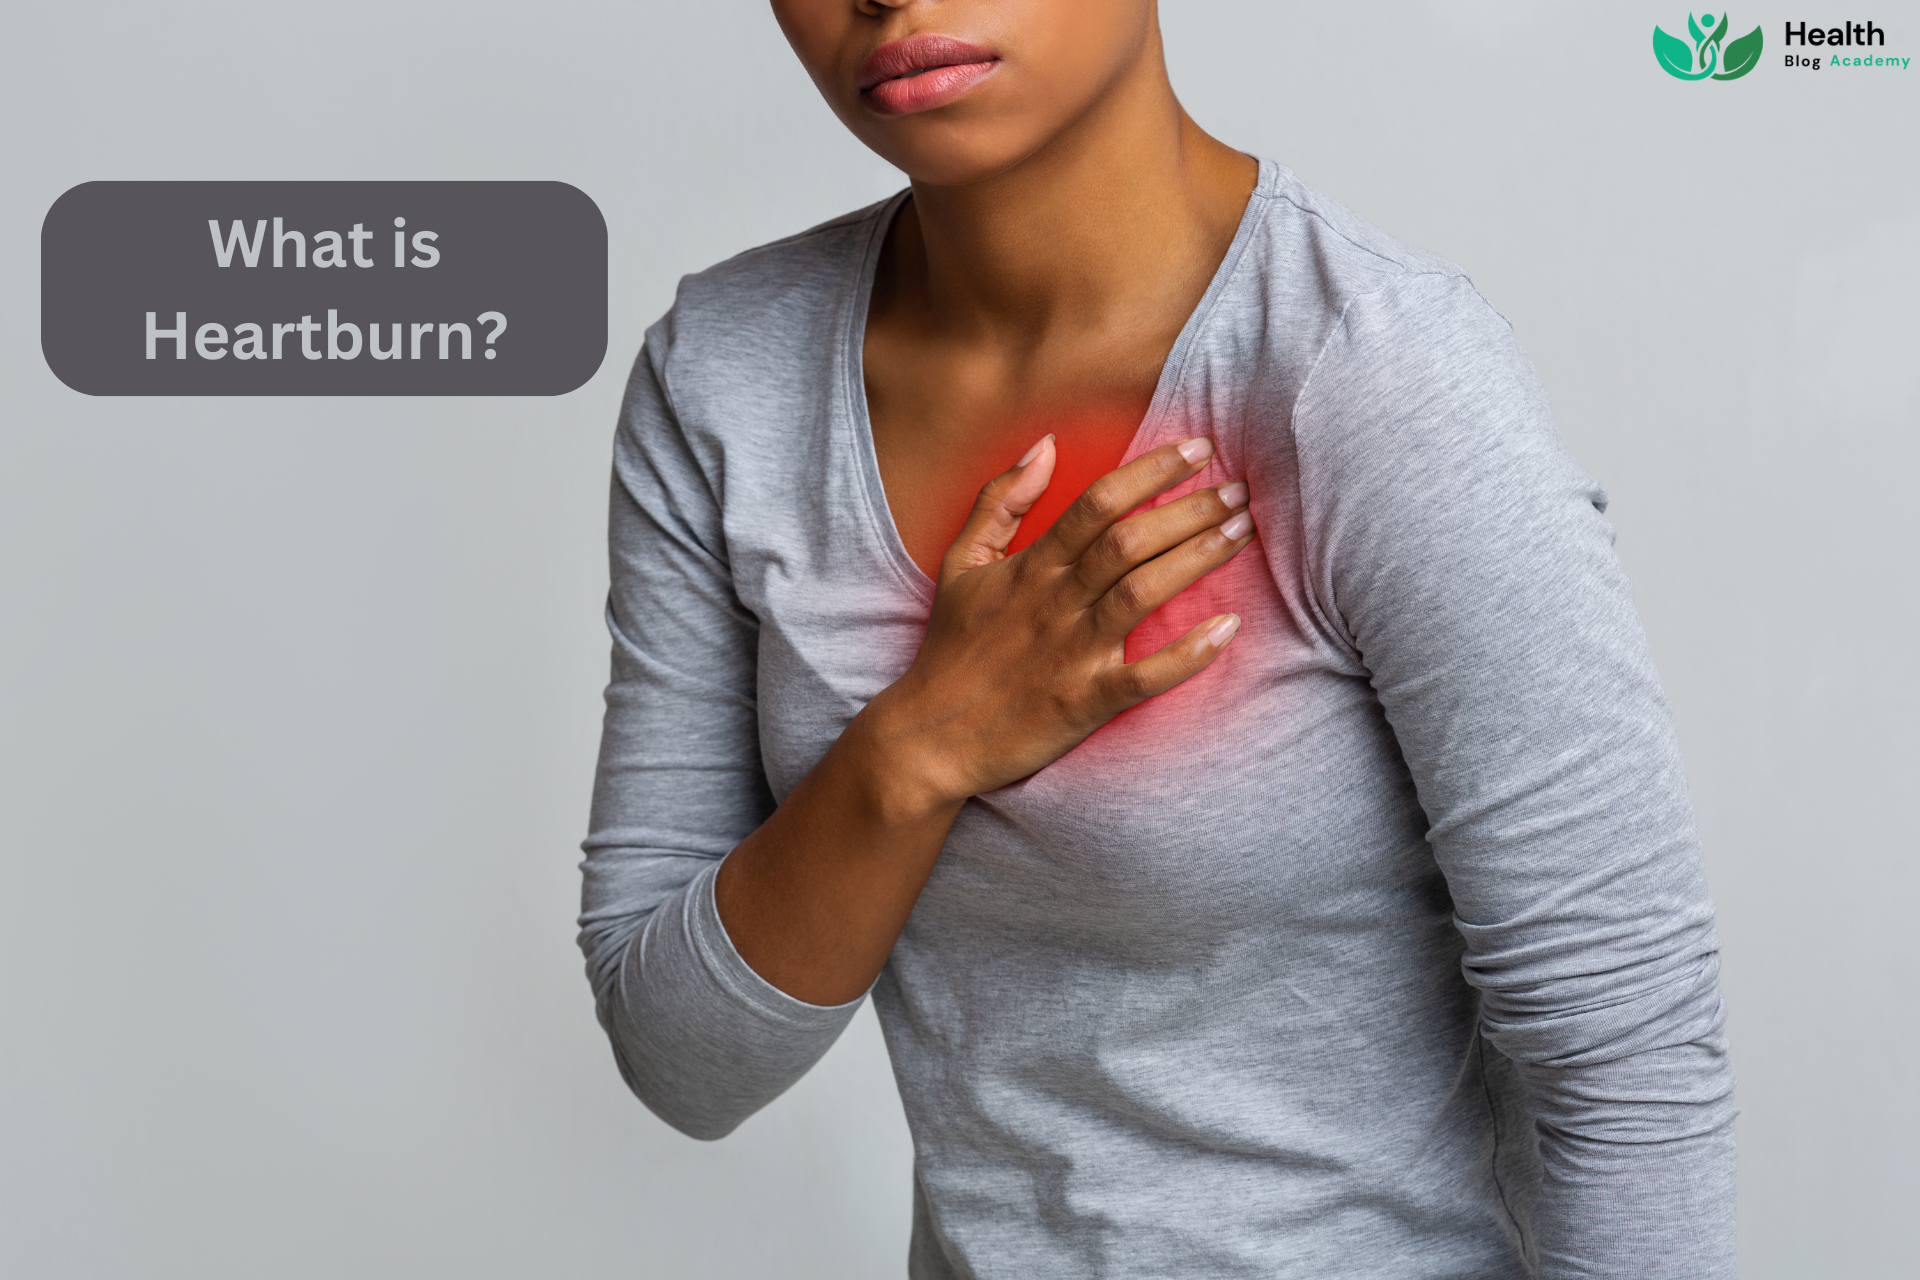 What is Heartburn